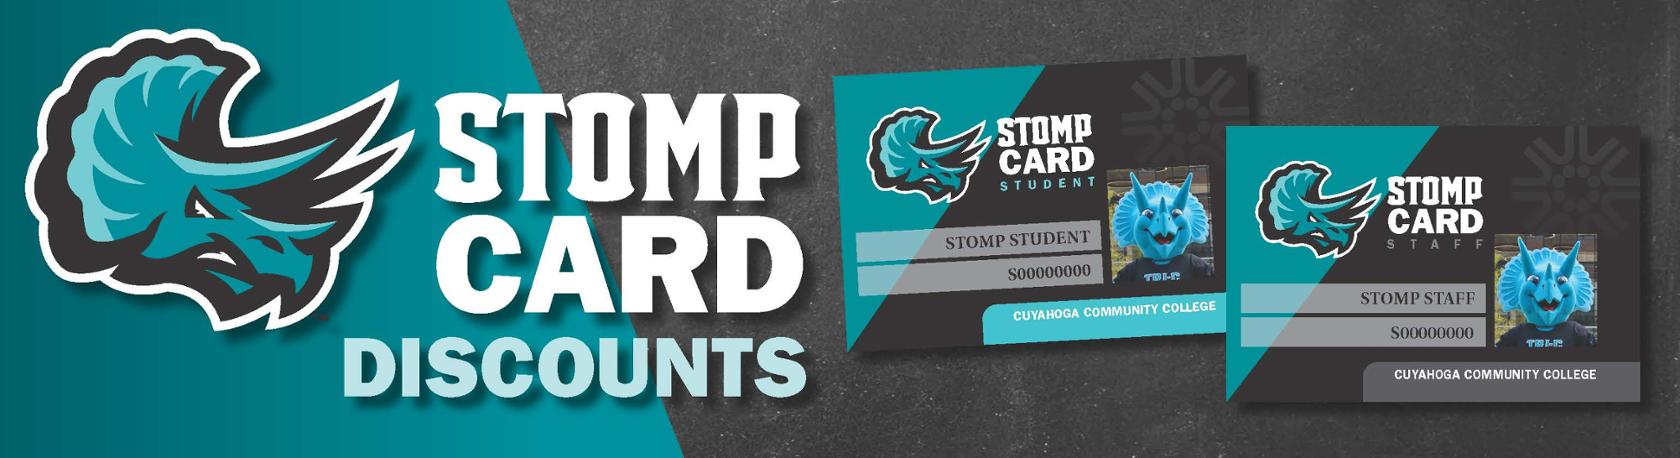 Stomp Card discounts